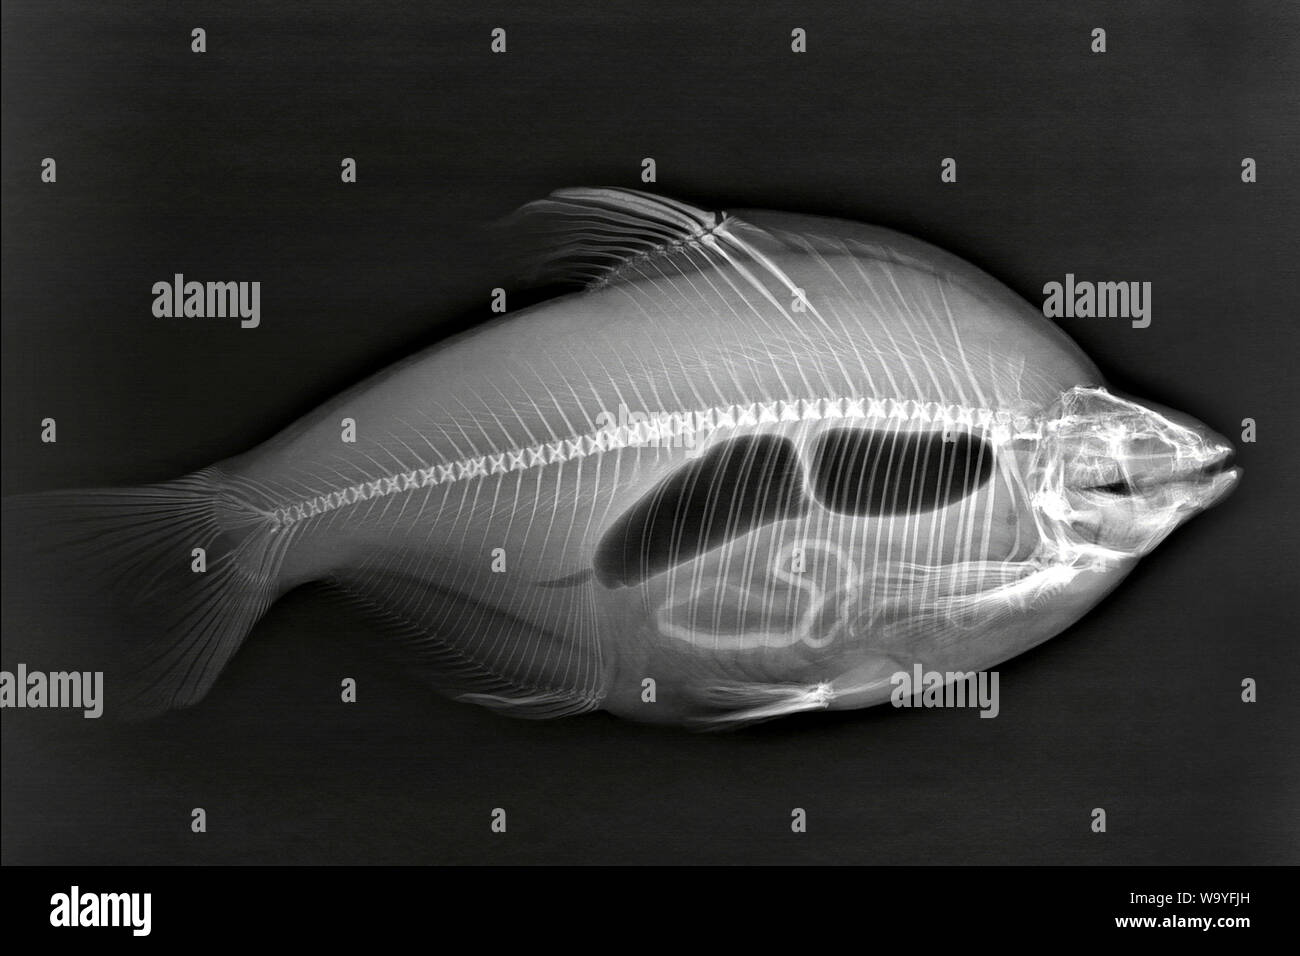 Wuchang fish under X-ray, X-ray, wuchang fish, silhouette Stock Photo